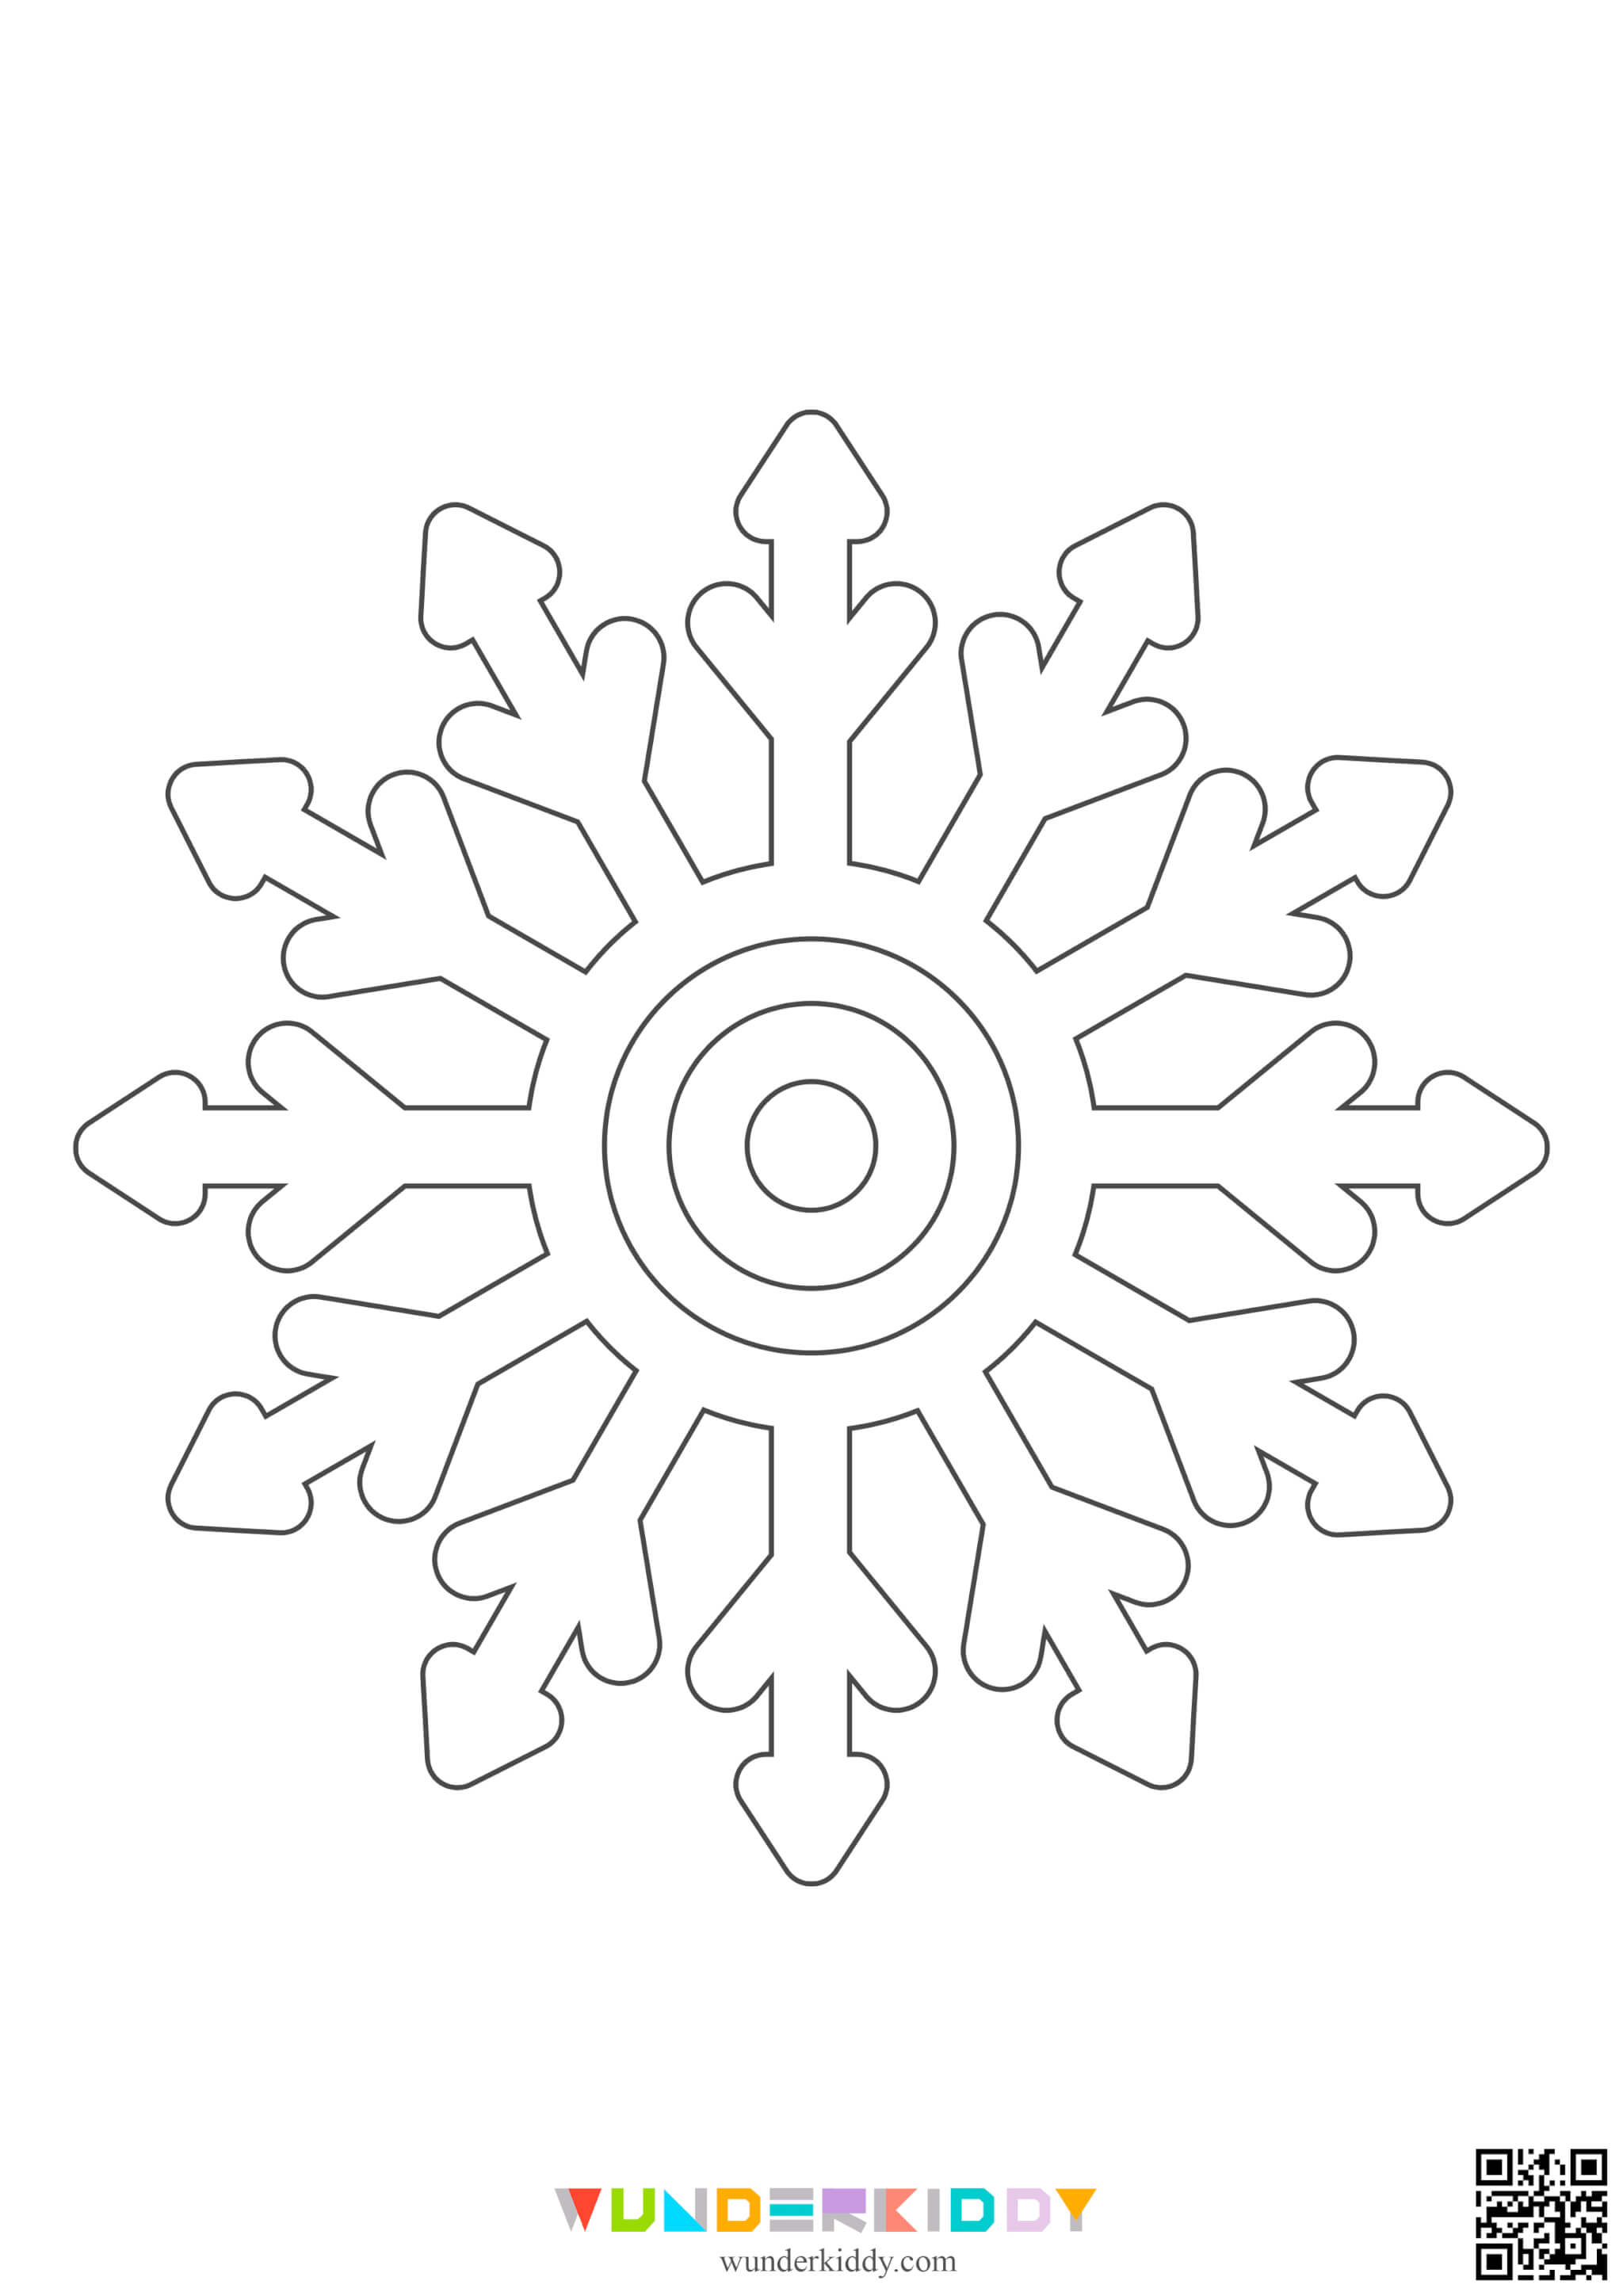 Snowflake Stencil Patterns - Image 13